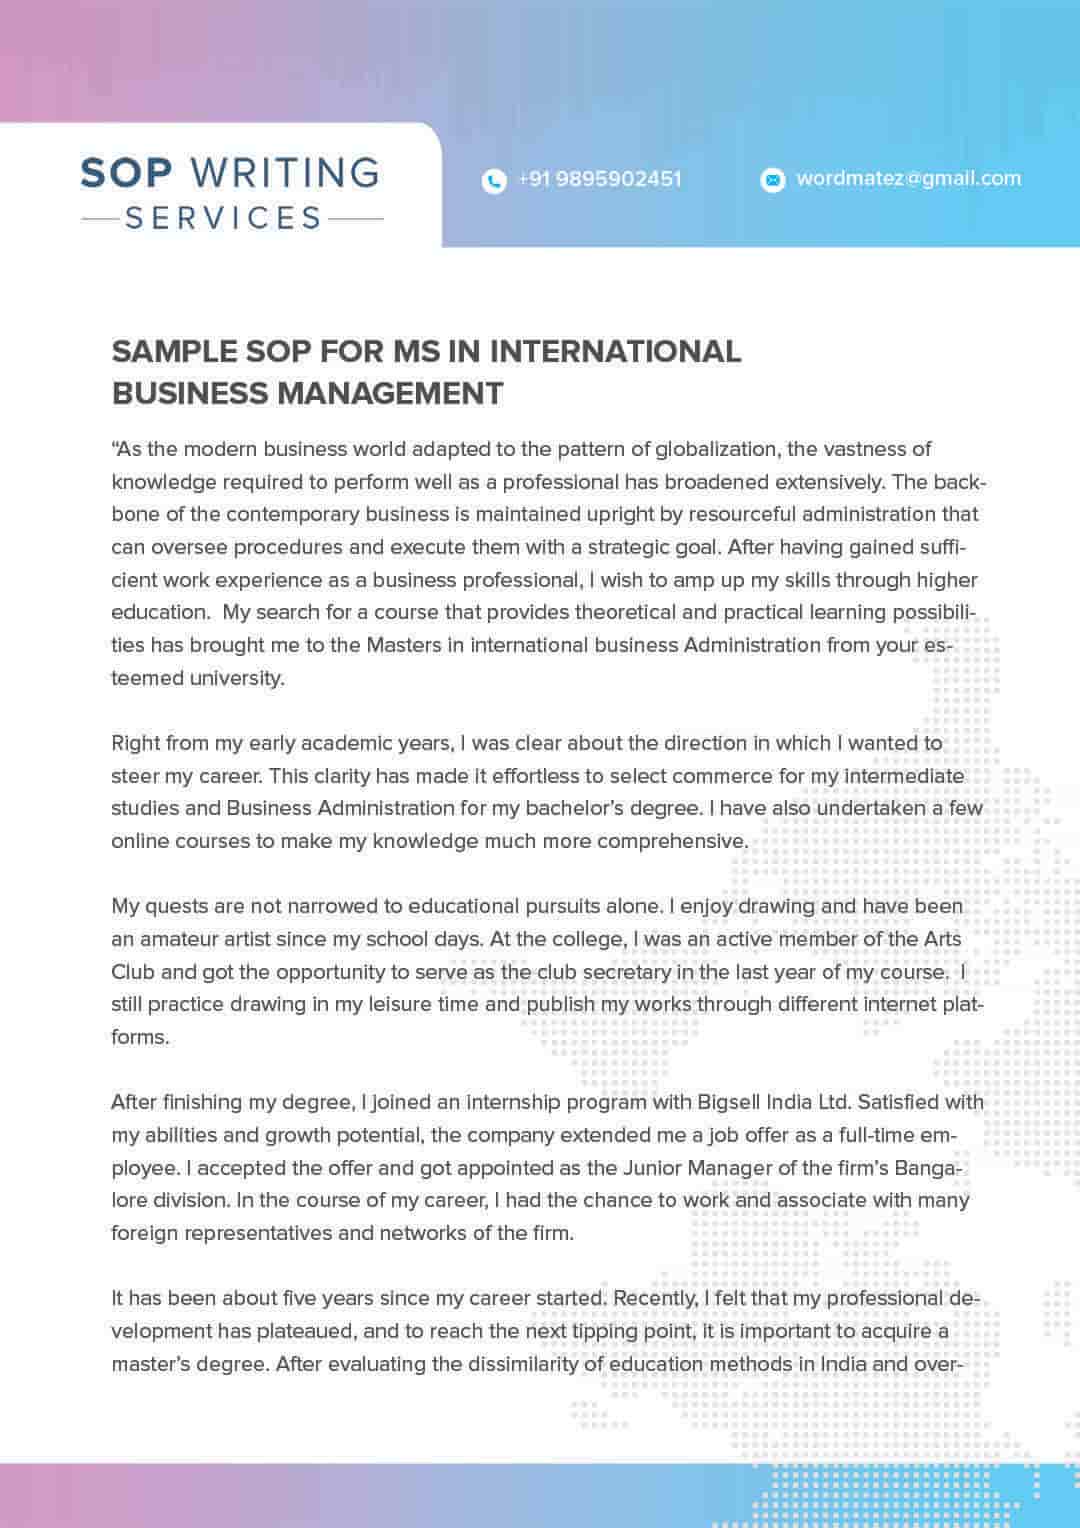 Sample-sop-for-MS-in-International-Business-Managemen (1)